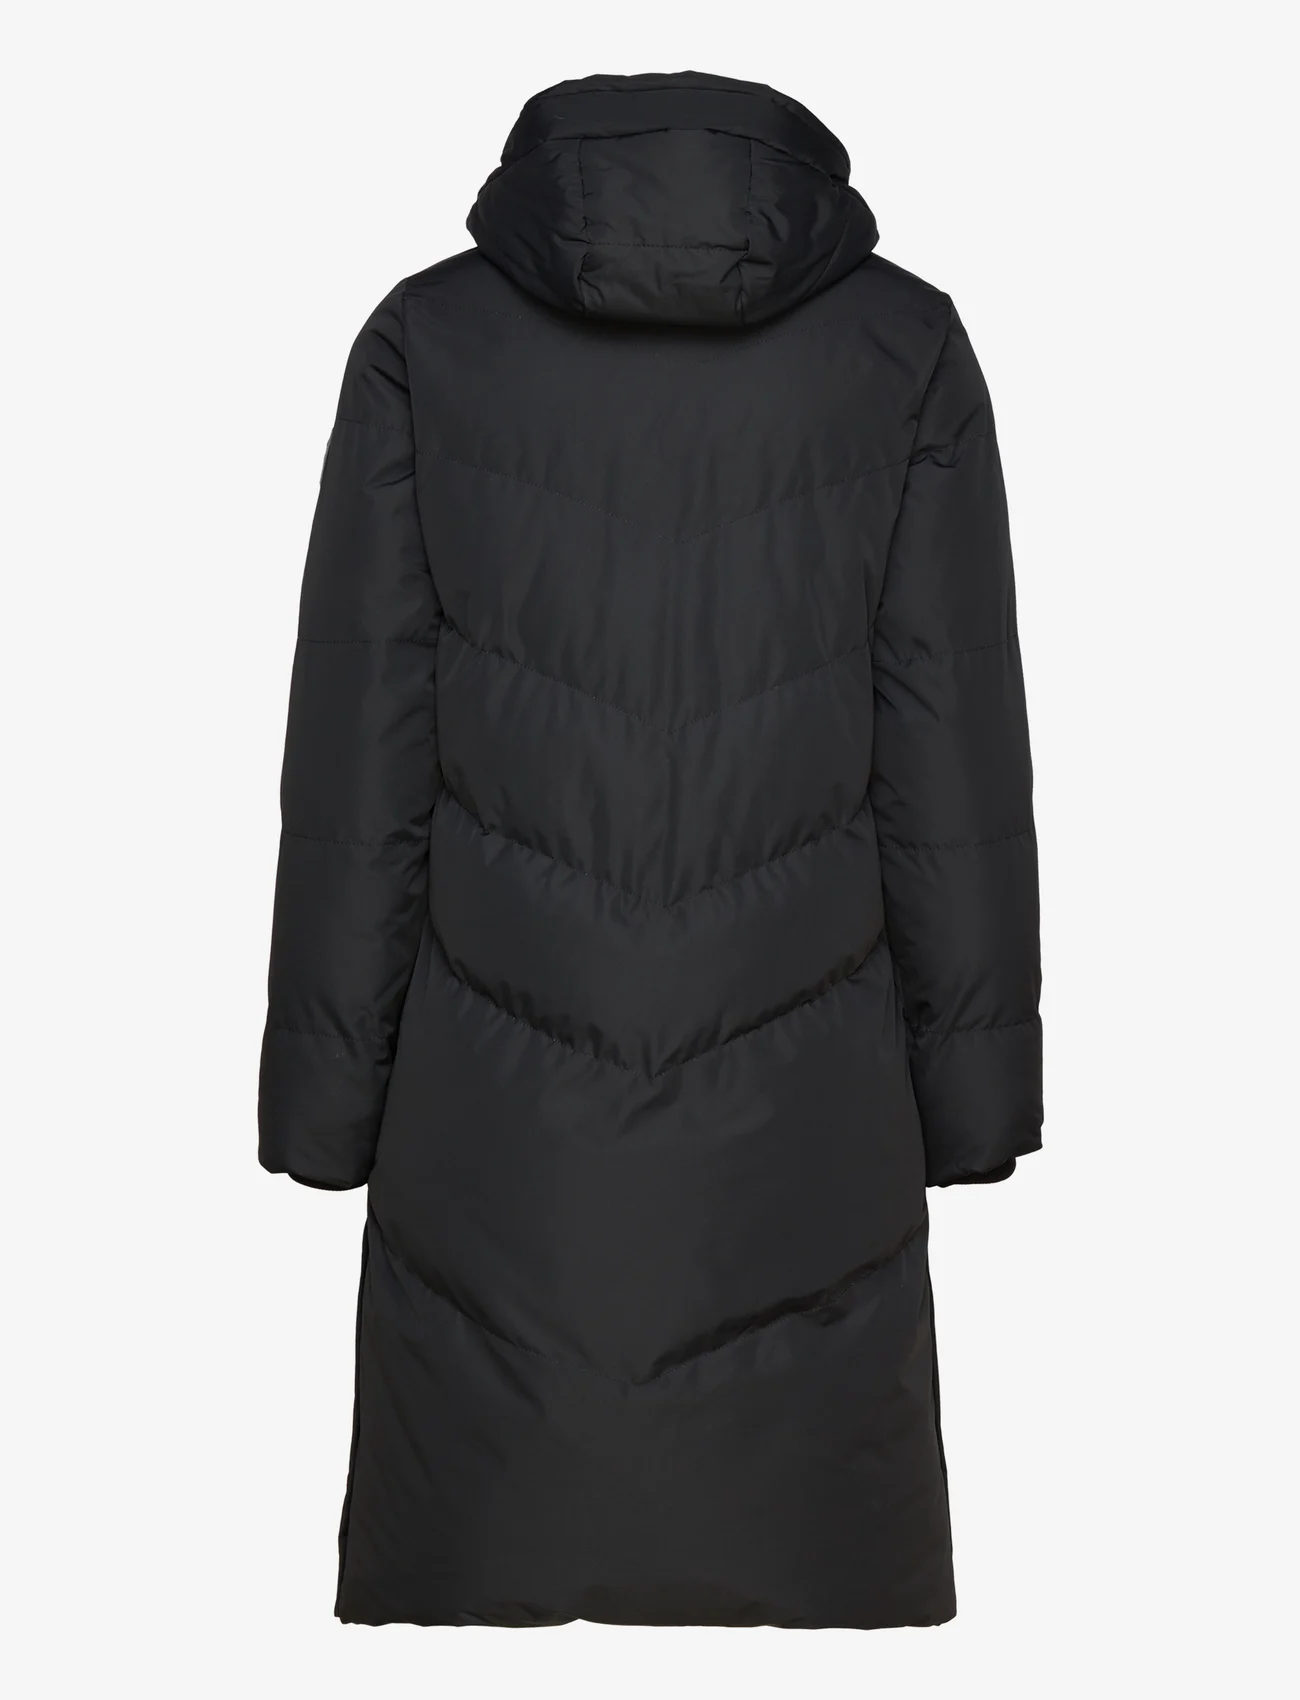 Garcia - ladies outdoor jackets - vinterjakker - black - 1